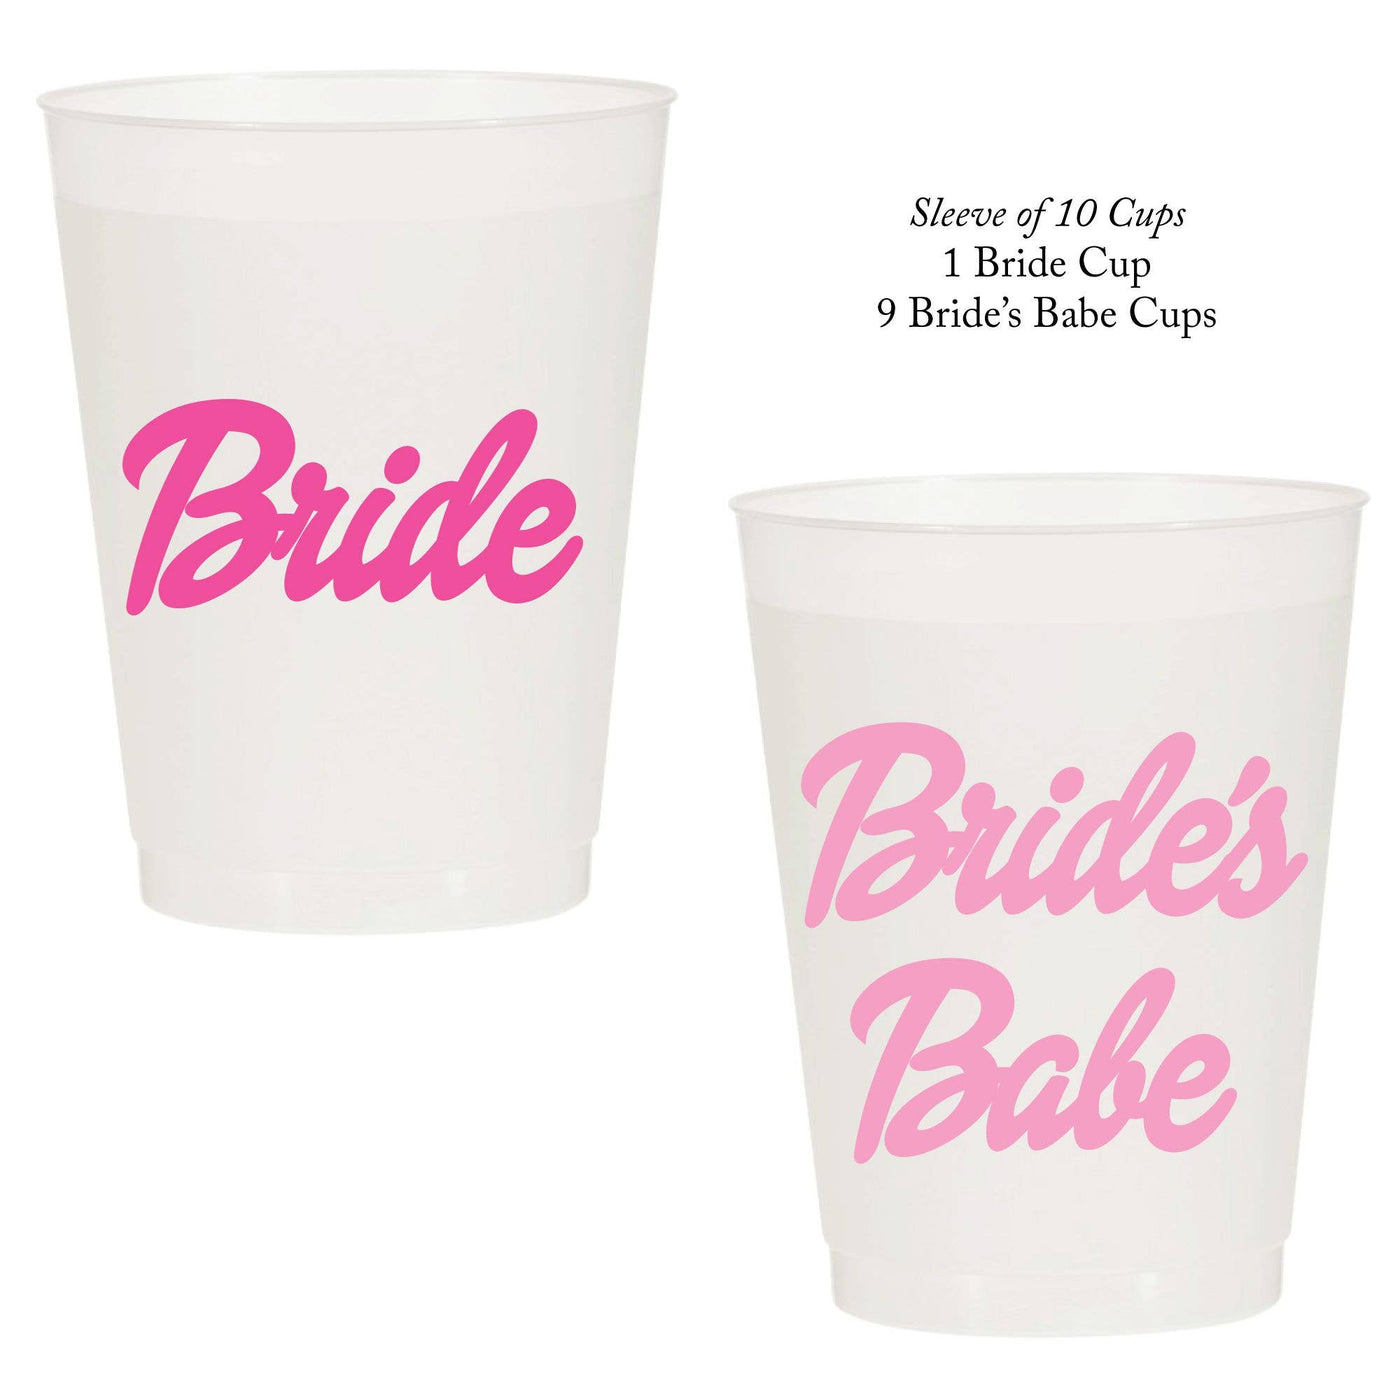 Bride & Bride's Babes Reusable Cups - Set of 10 Cups